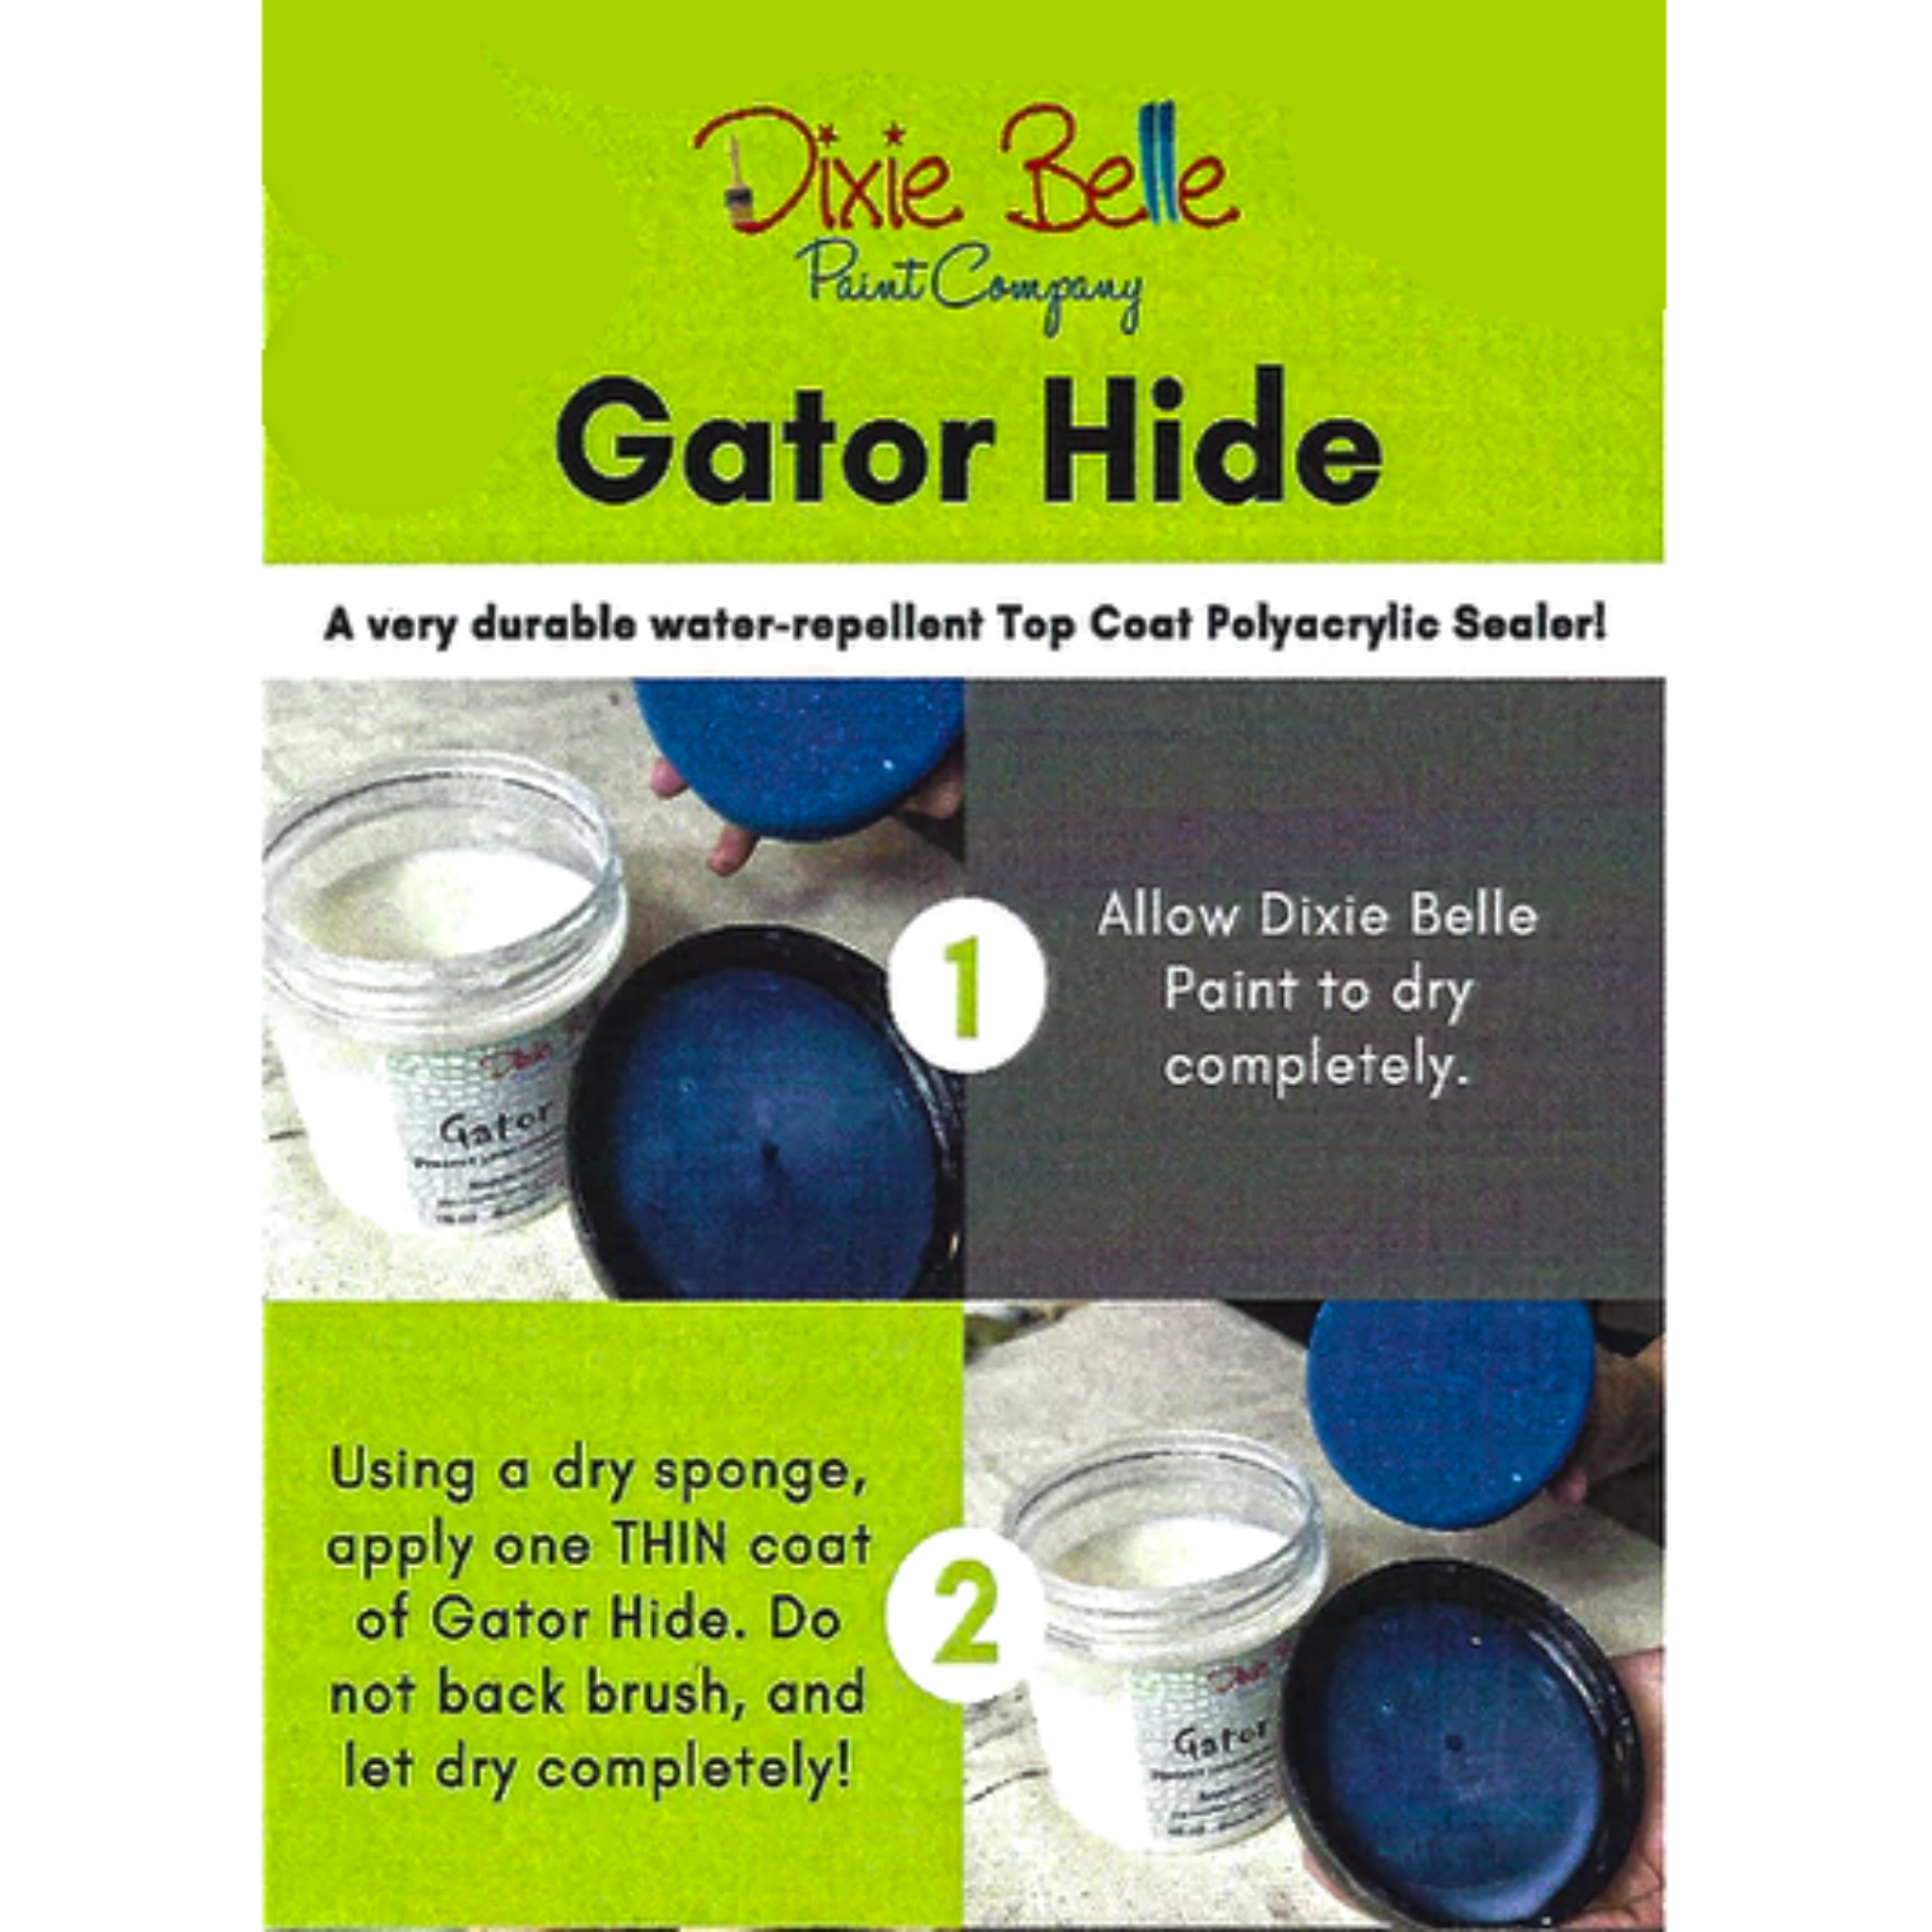 Directions for Dixie Belle Paint's Gator Hide using their Blue Sponge Applicator. Step 1 - Allow Dixie Belle Paint to dry completely. Step 2 - Using a dry sponge, apply one THIN coat of Gator Hide. Do not back brush, and let dry completely!